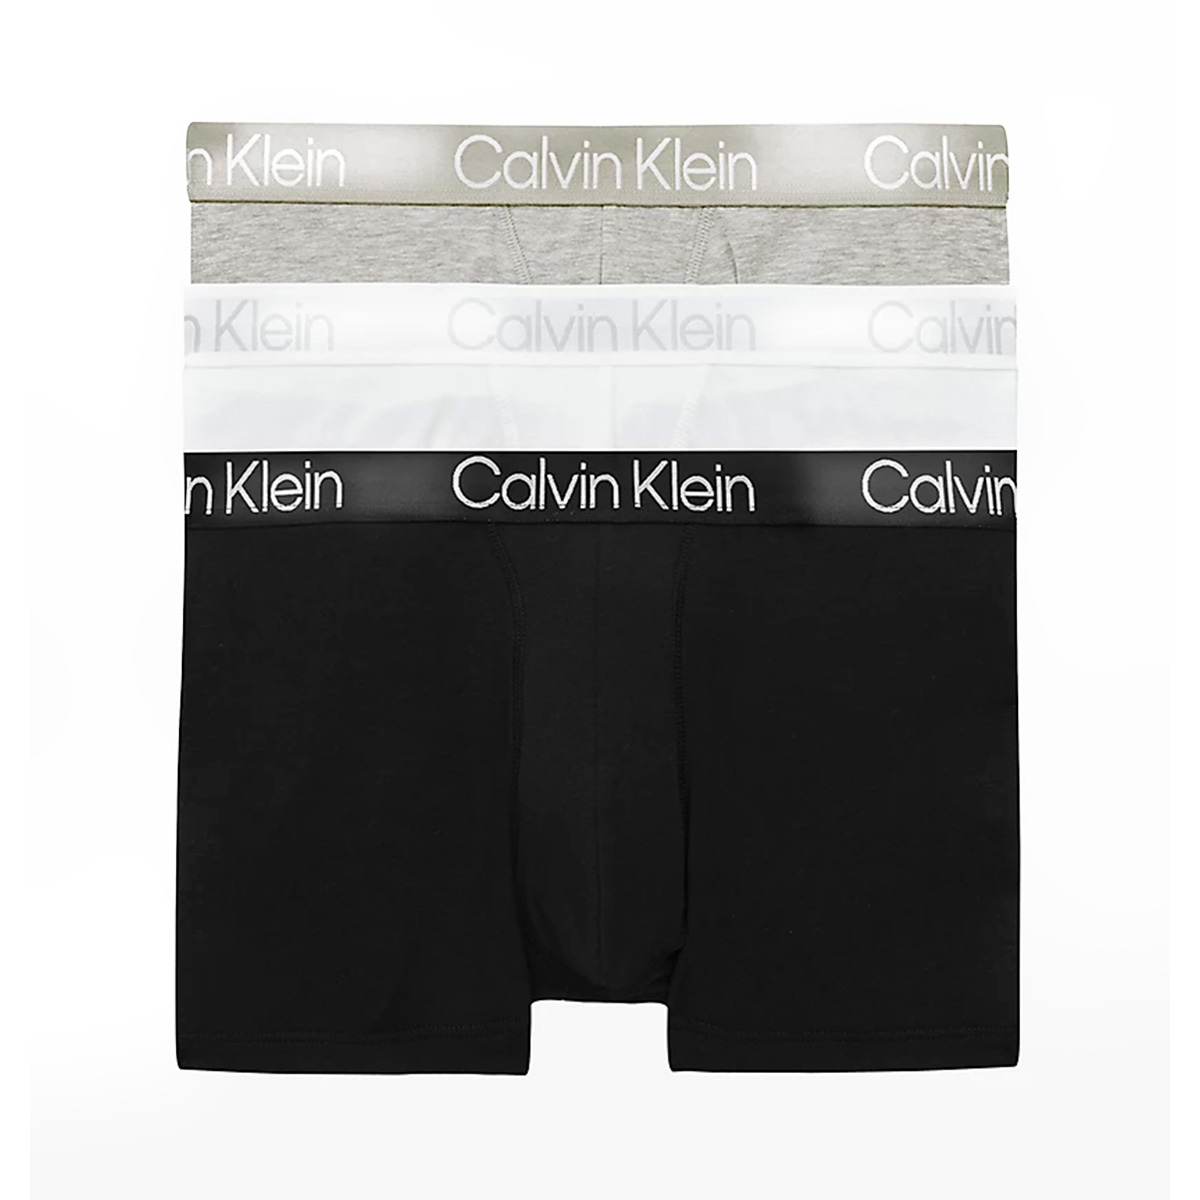 Calvin Klein panties women 3pack 100% original - Poland, New - The  wholesale platform